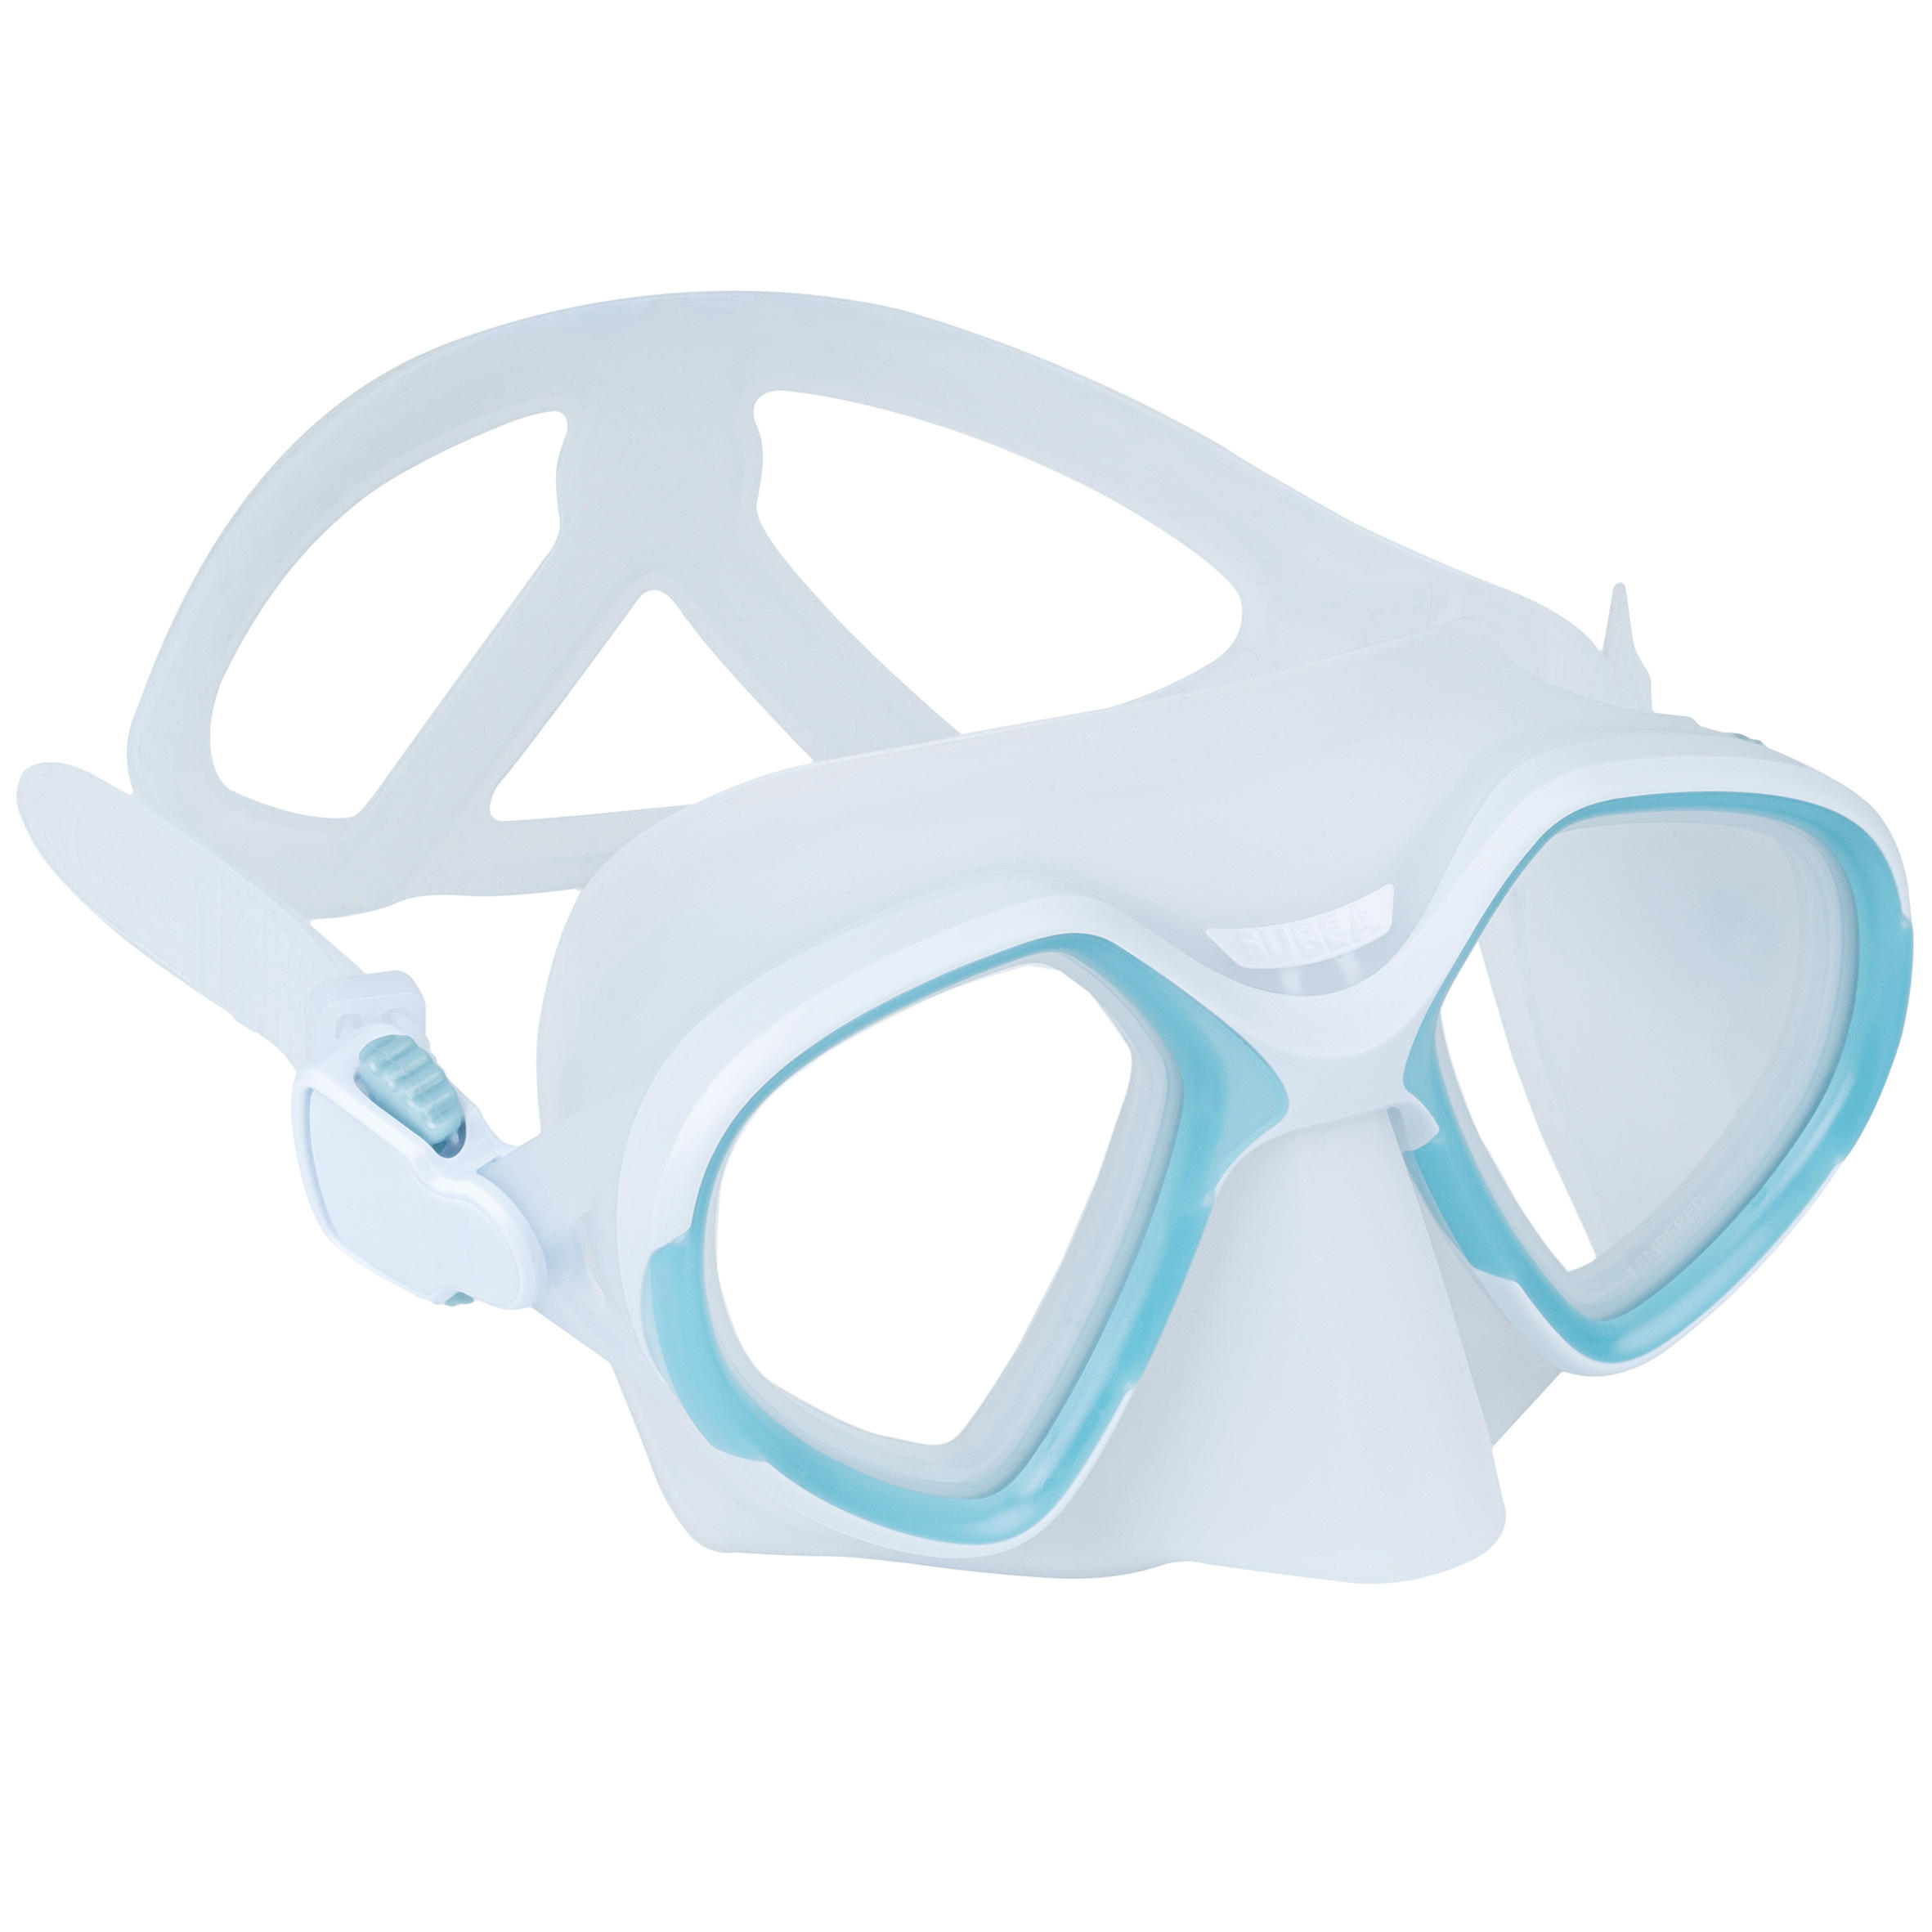 Mască scufundări apnee volum redus – 500 Dual Albastru arctic La Oferta Online decathlon imagine La Oferta Online